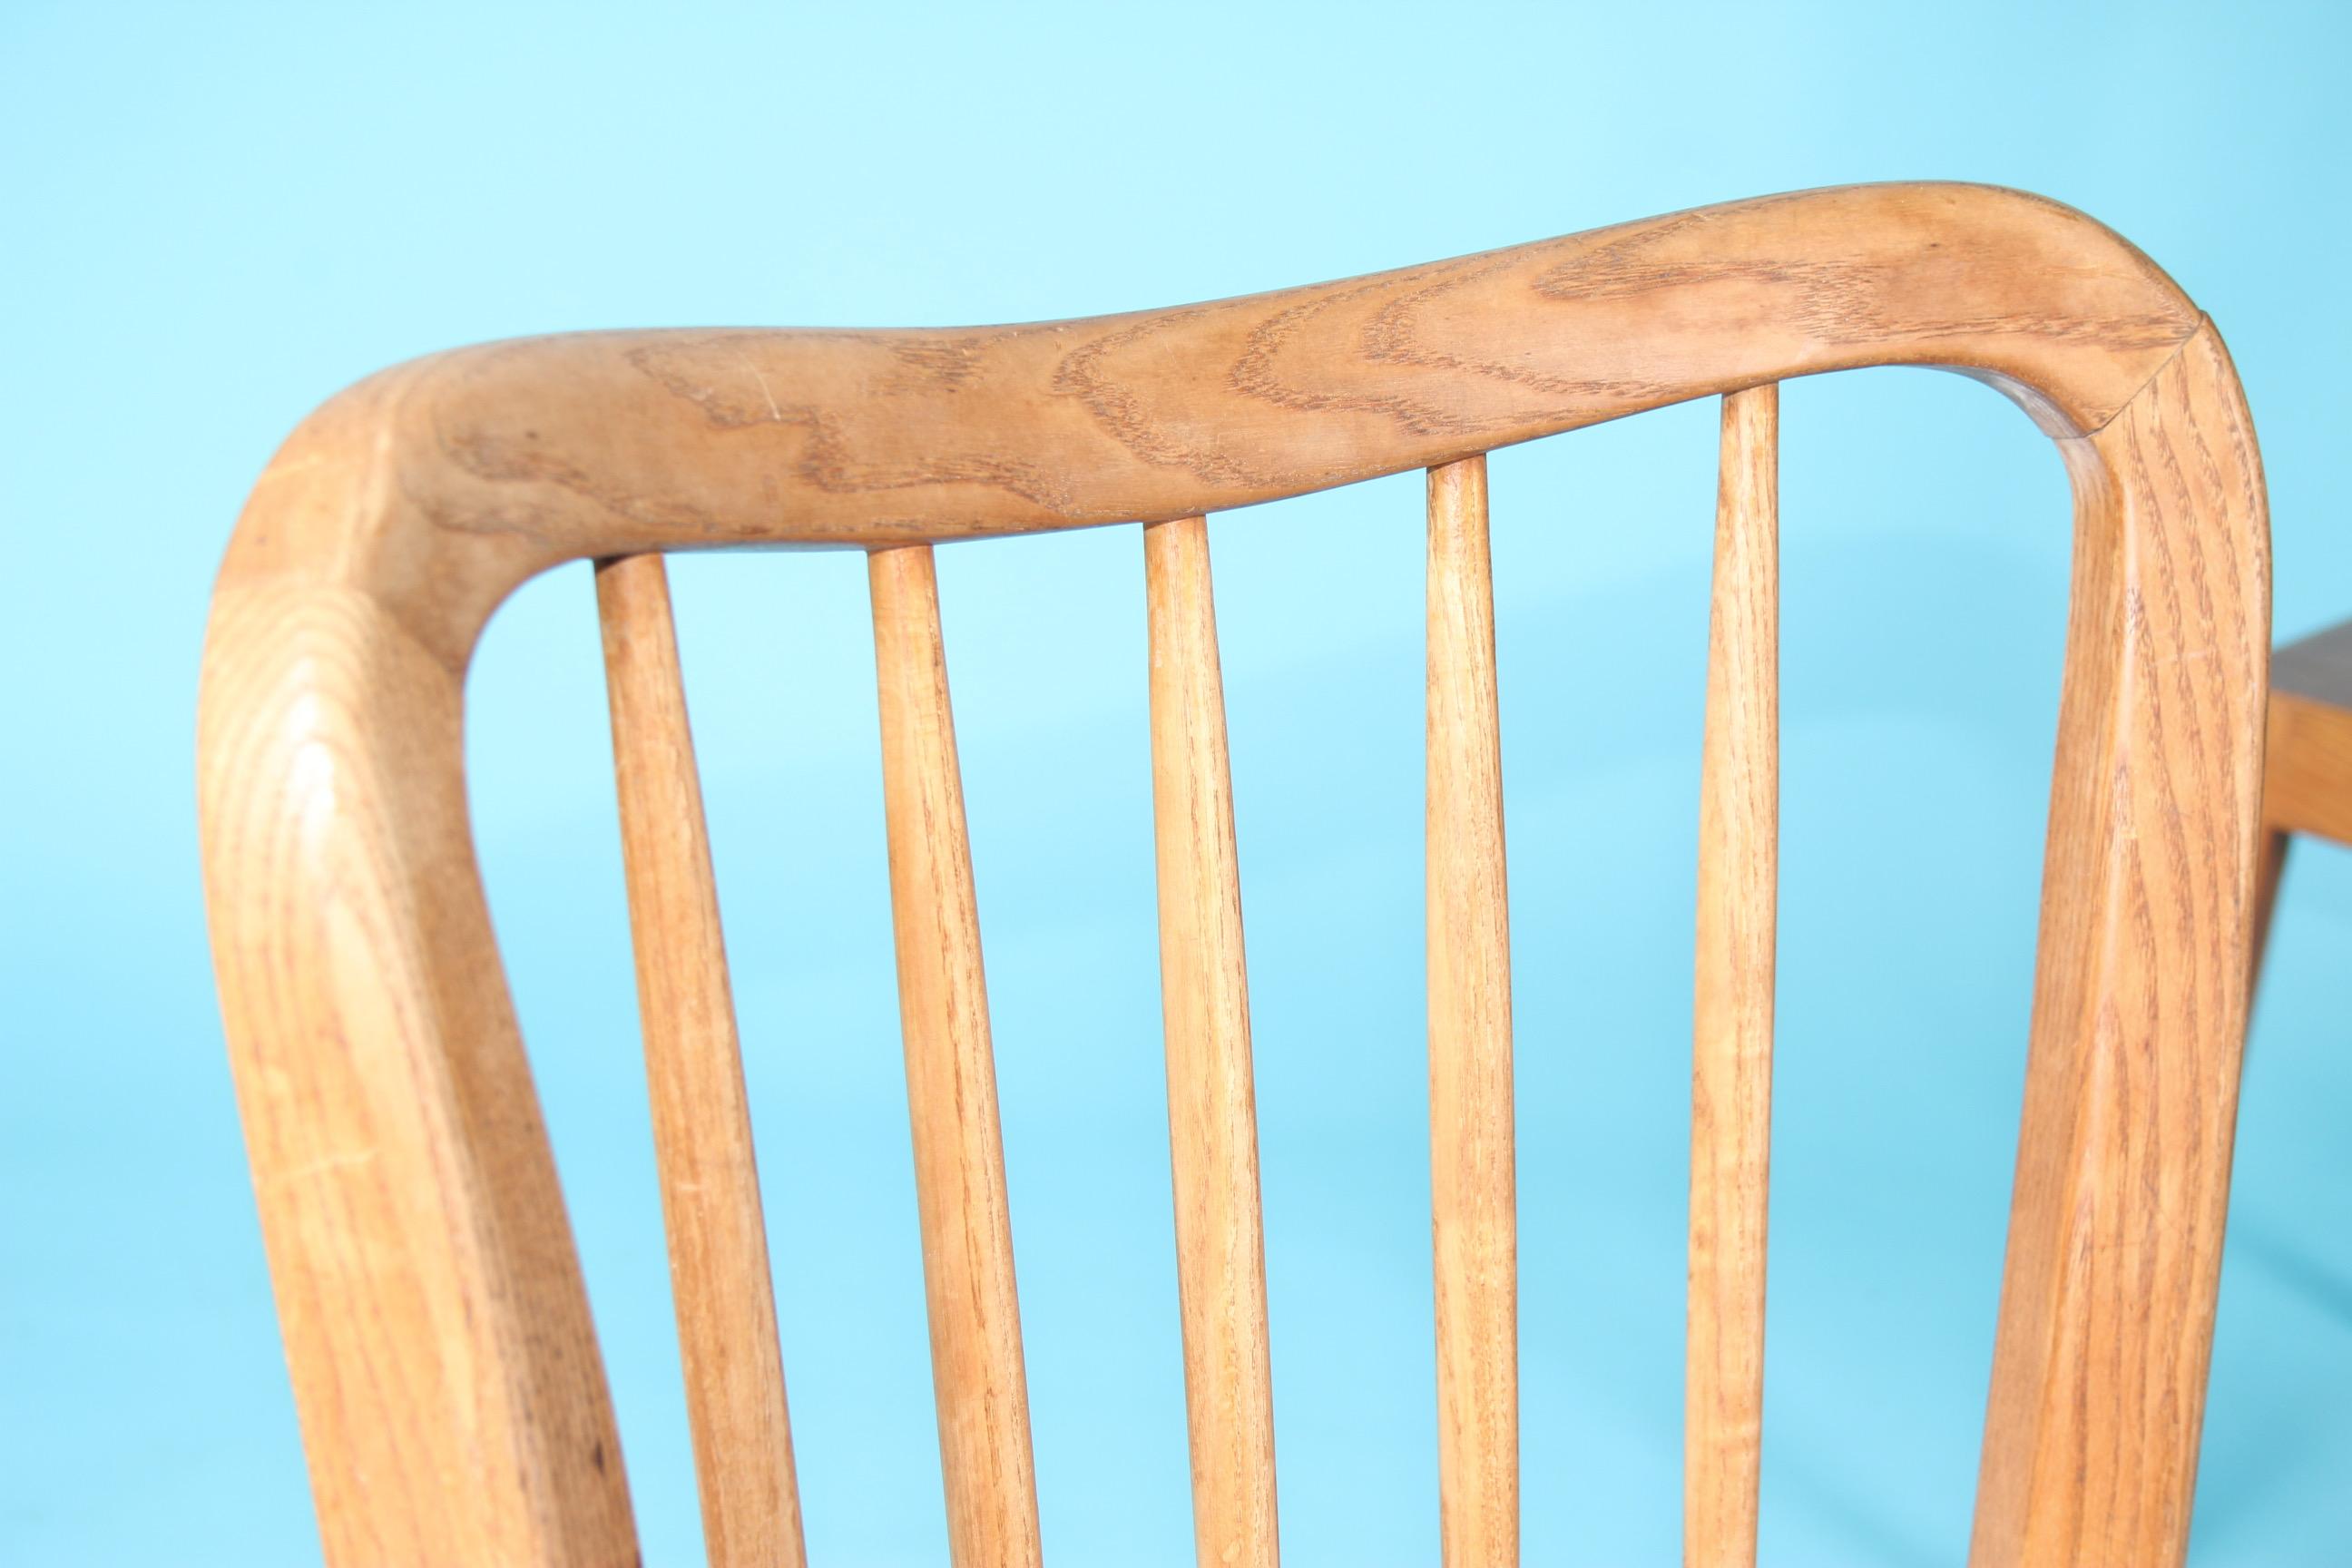 European Pair of Organic Wood Chairs